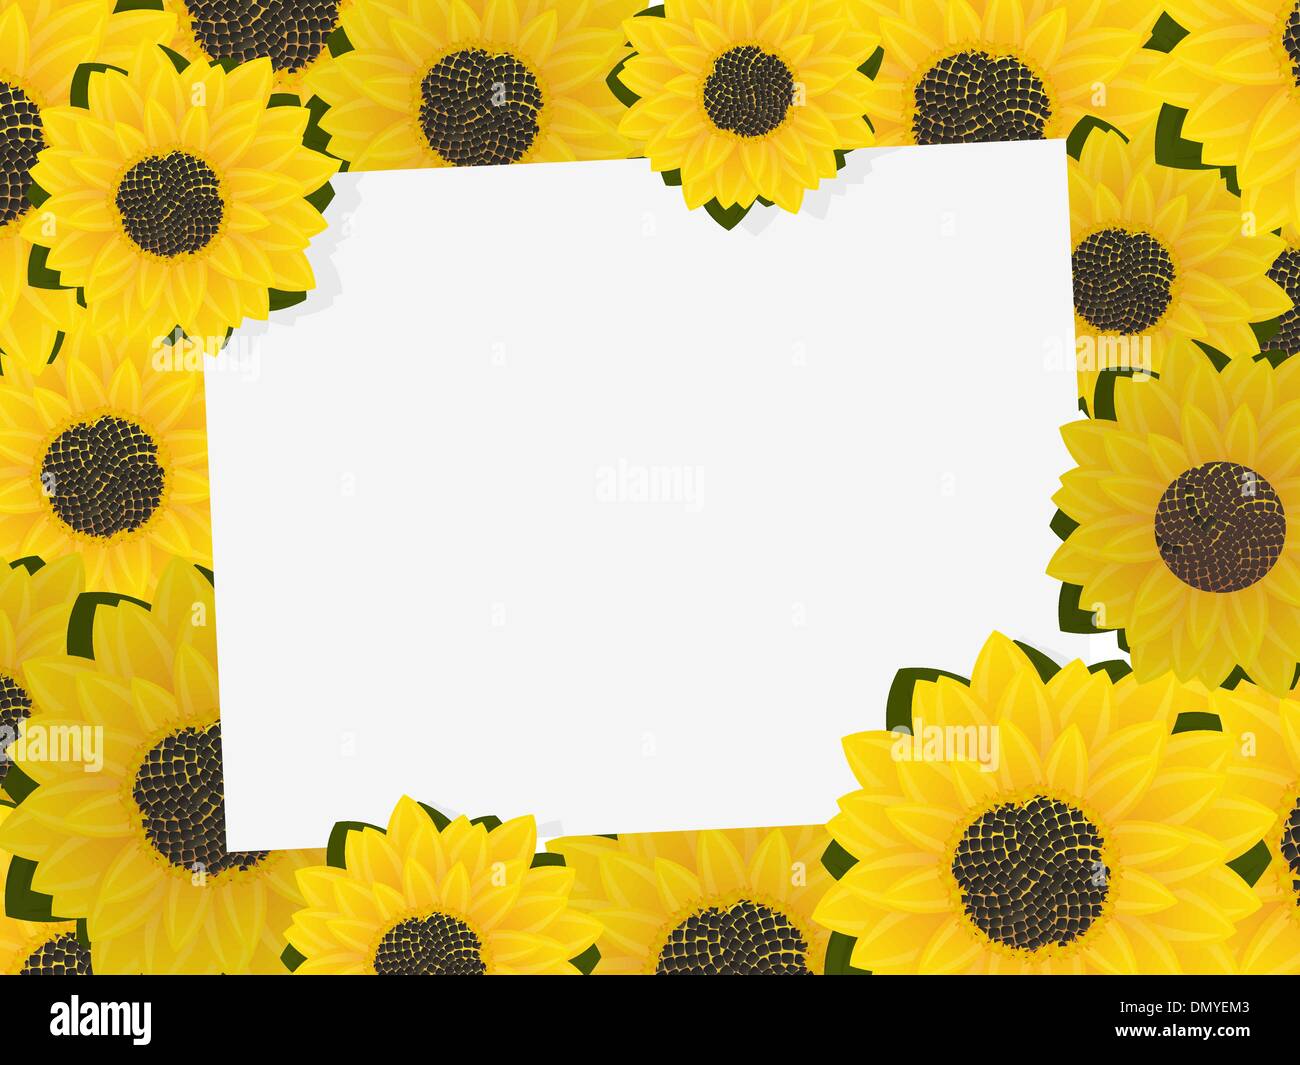 Sunflower frame Stock Vector Images - Alamy